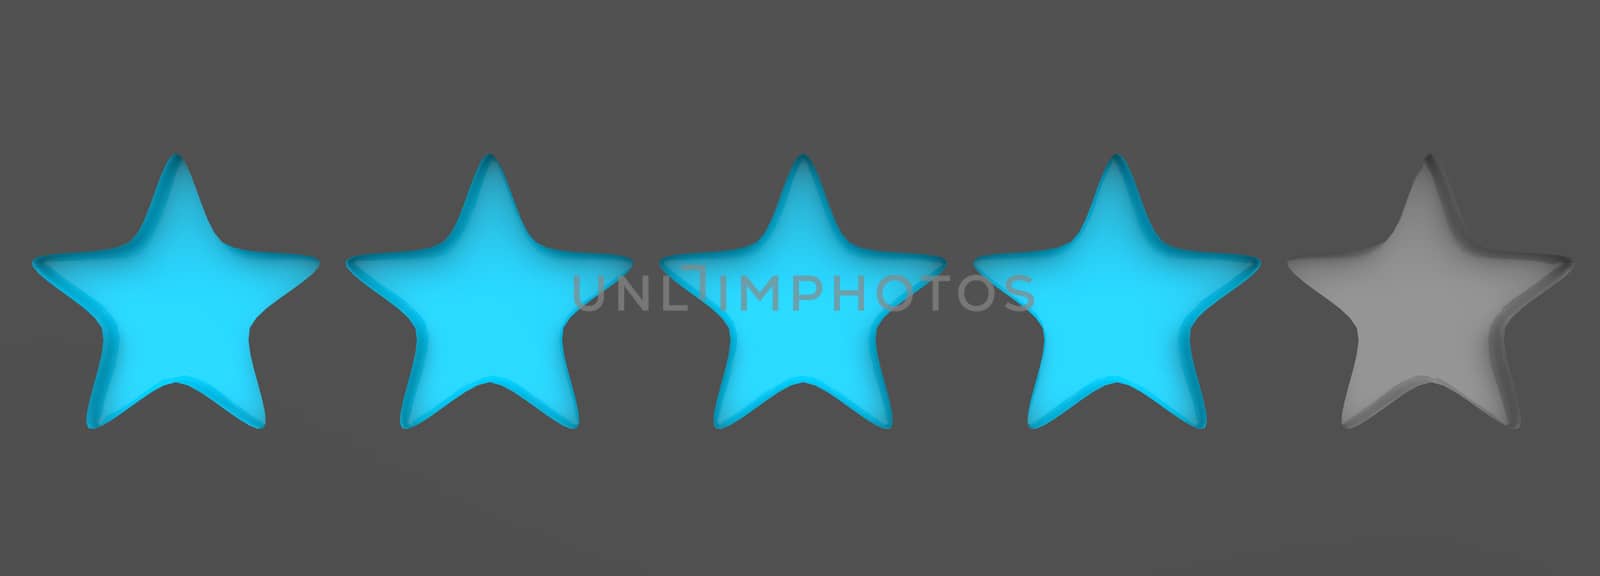 3d four azure star on color background. Render and illustration of golden star for premium